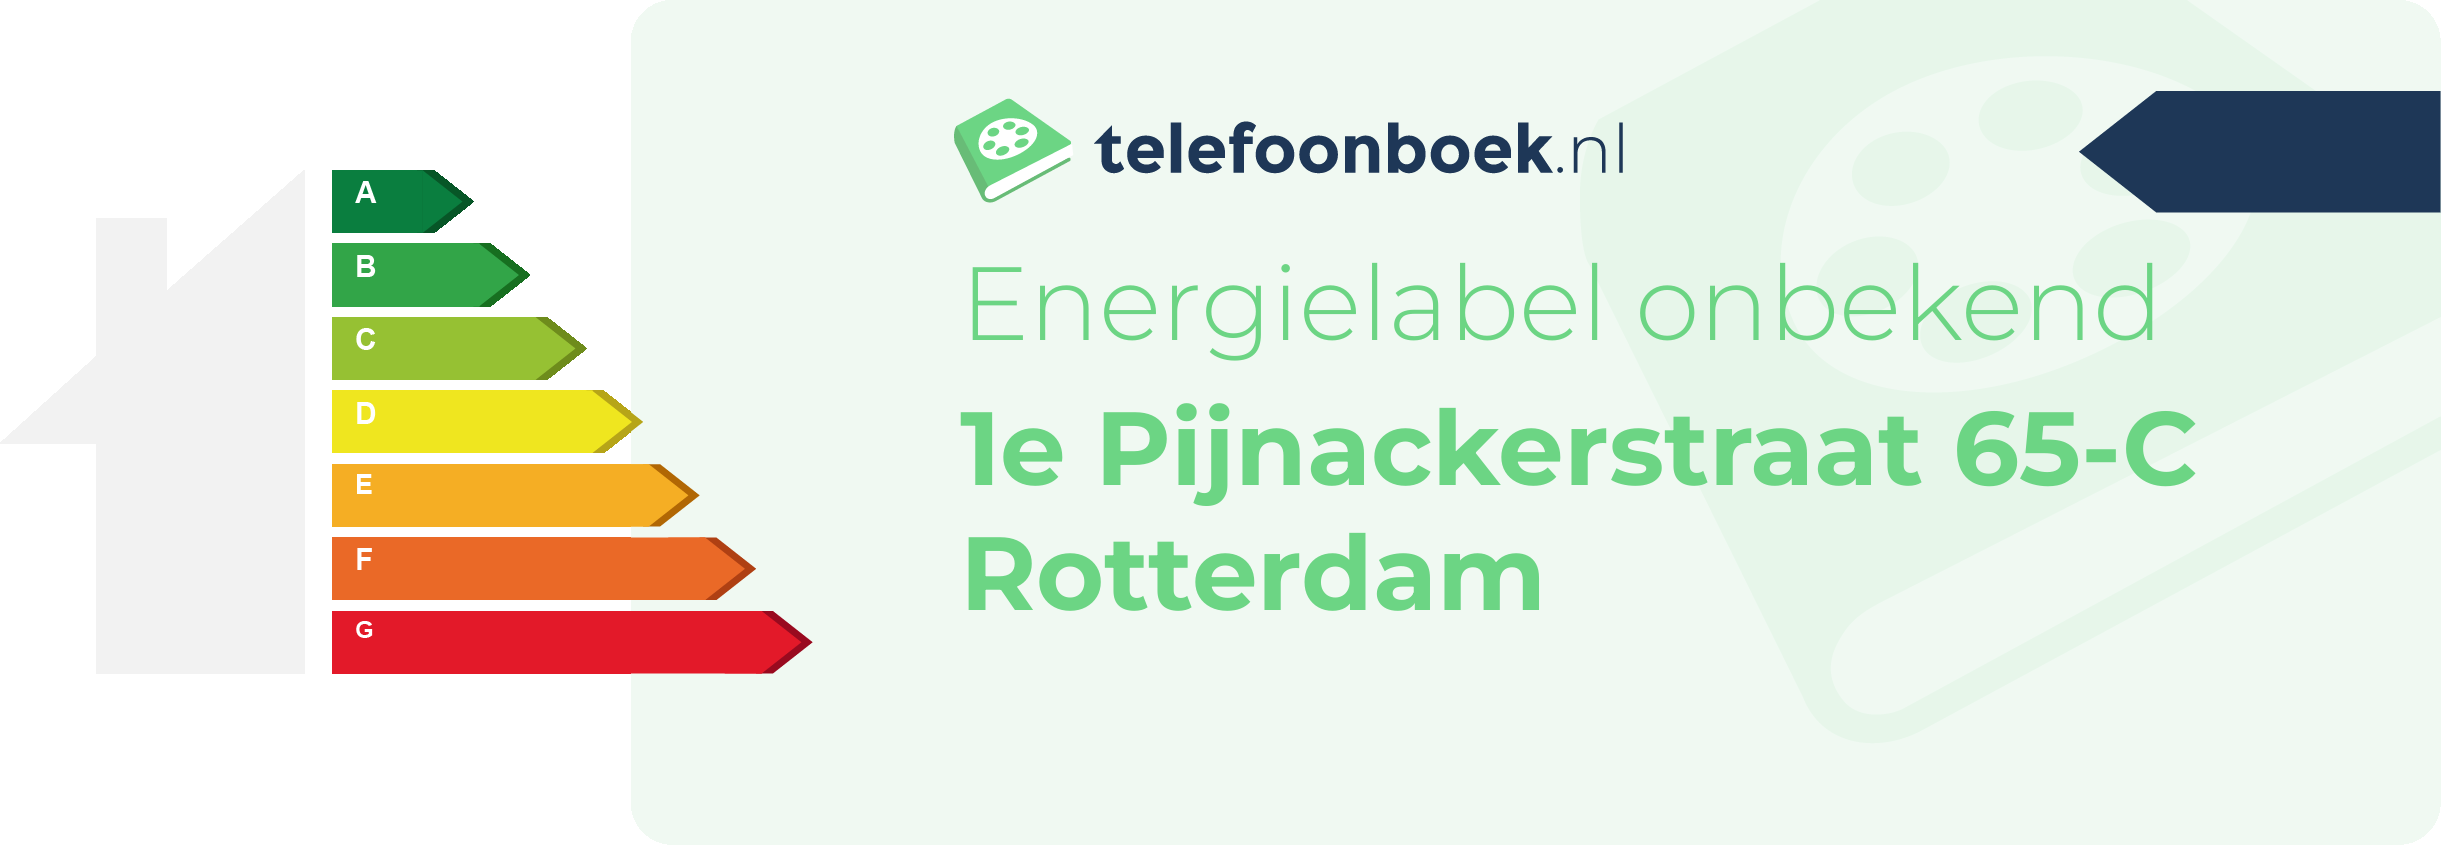 Energielabel 1e Pijnackerstraat 65-C Rotterdam